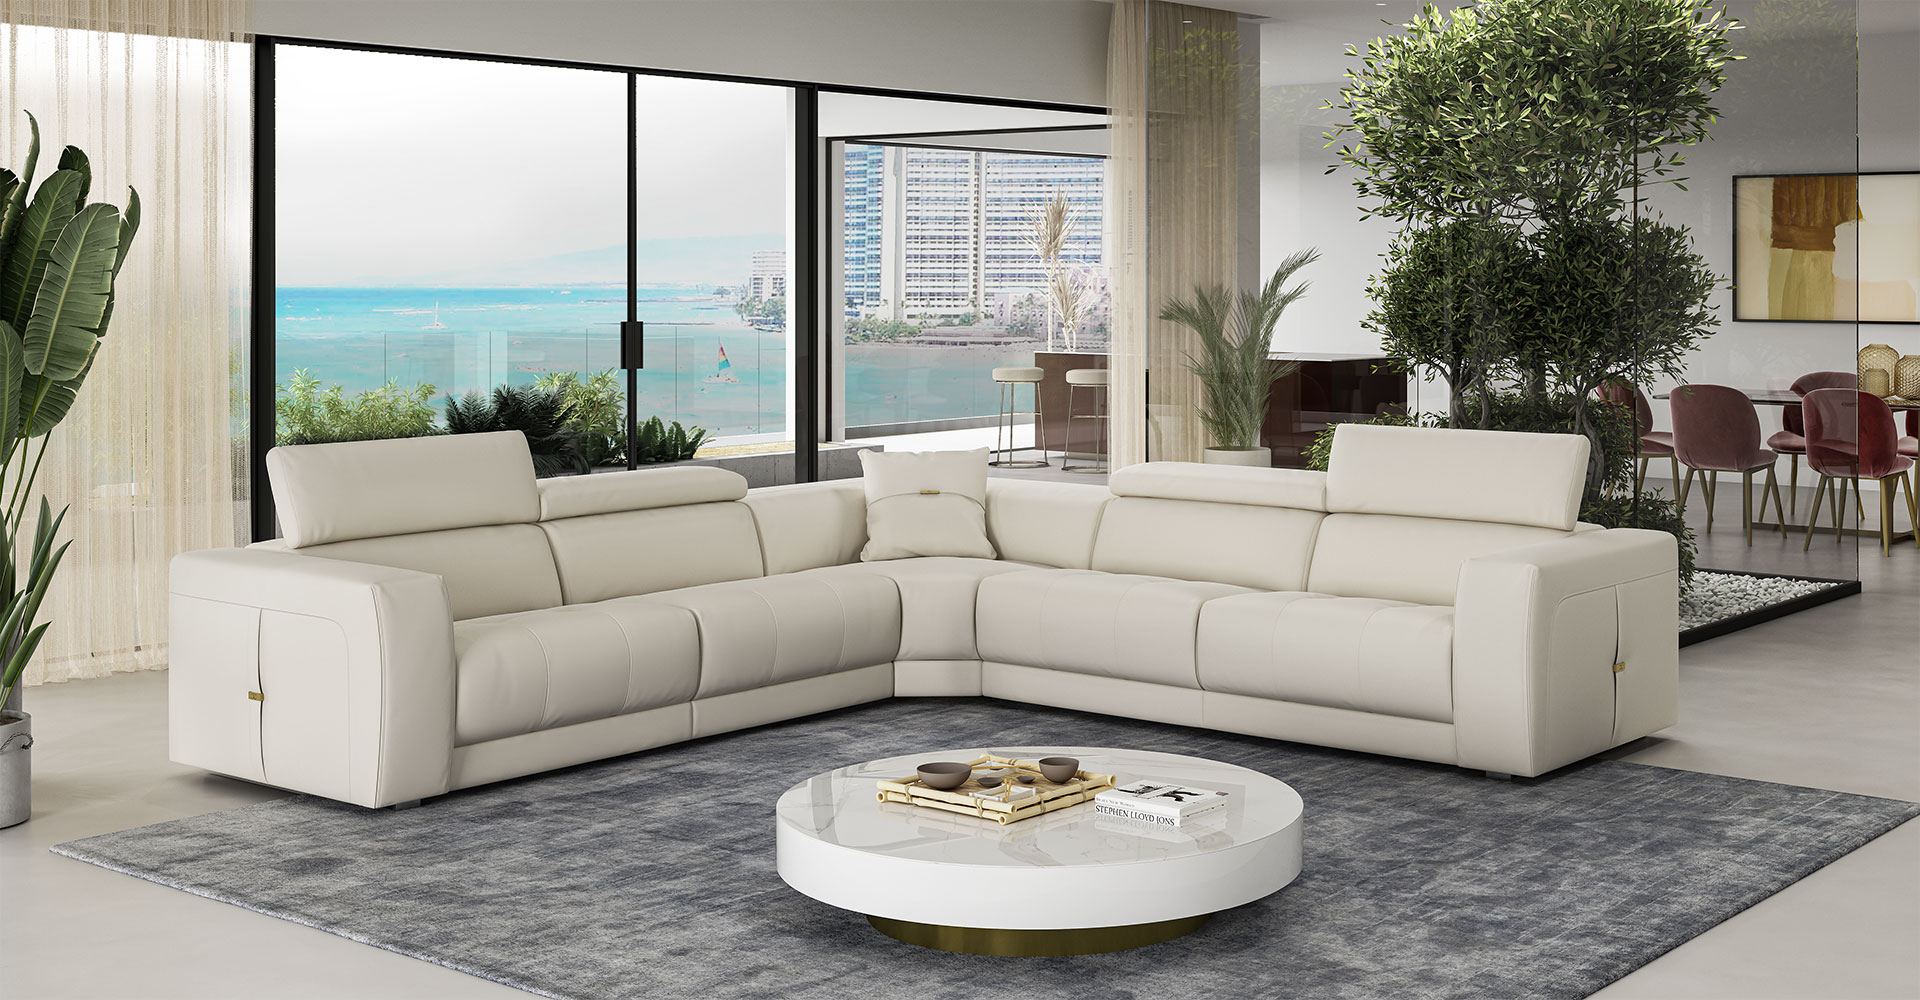 VIG Furniture Coronelli Dalton Italian White Leather Sectional Recliners